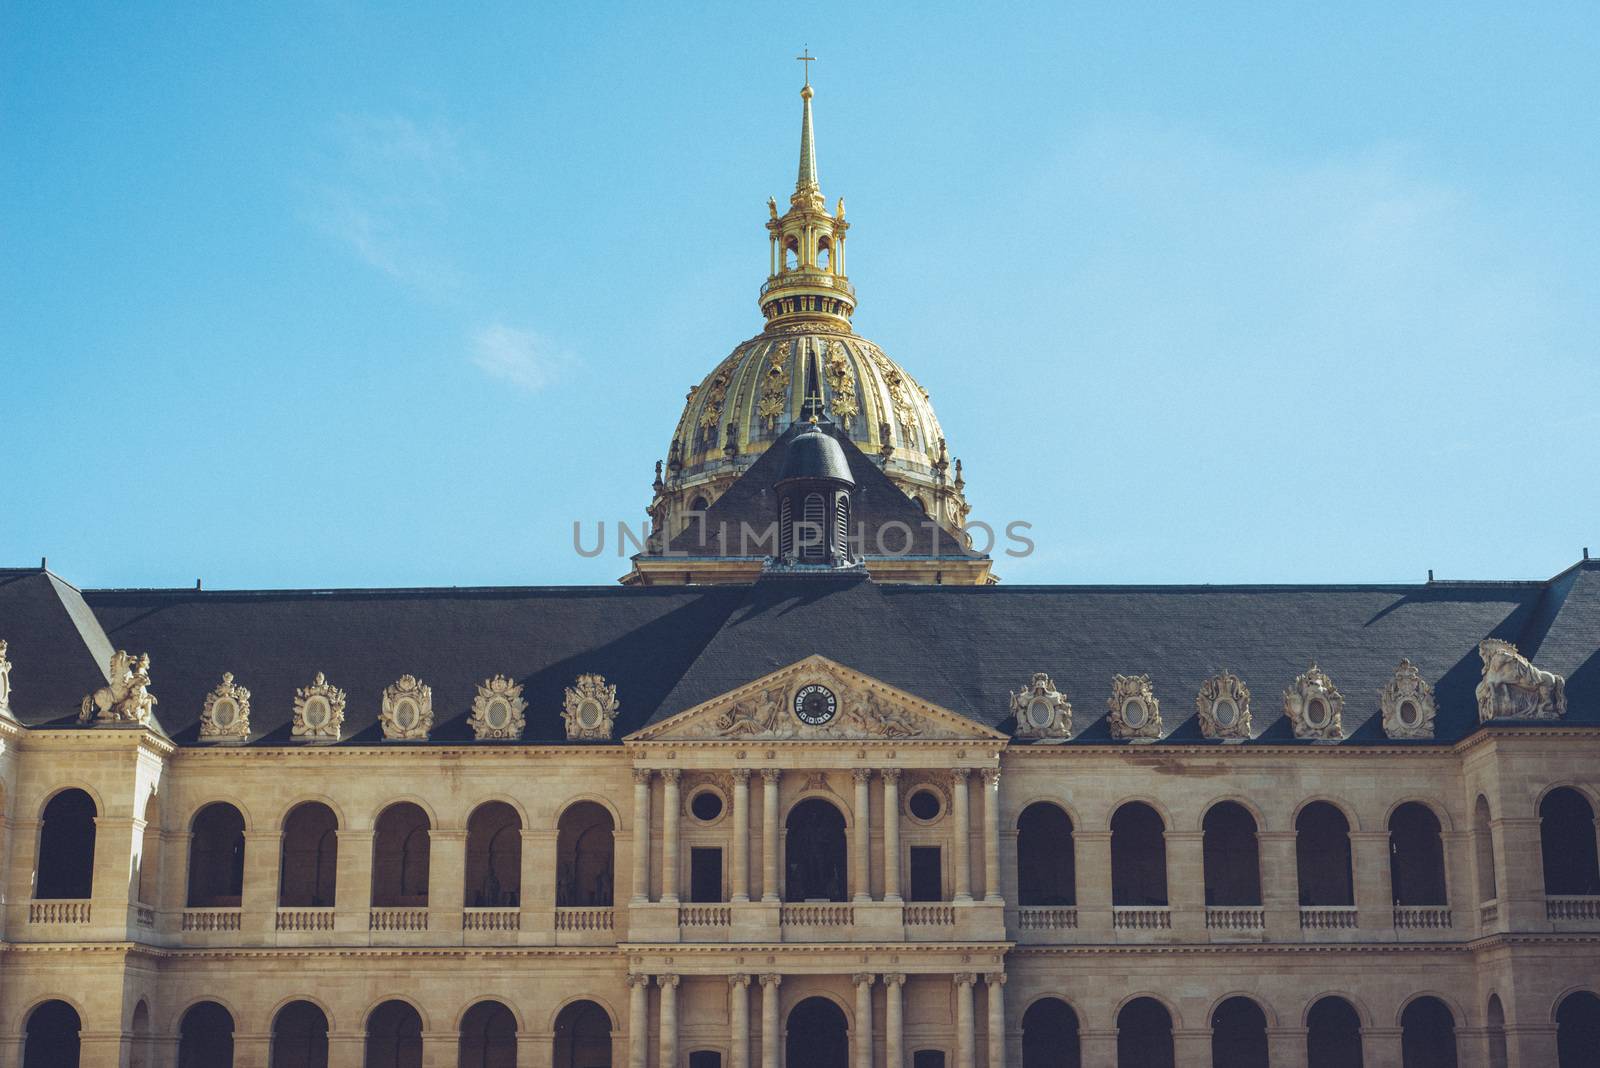 Les Invalides - Paris France city walks editorial travel shoot